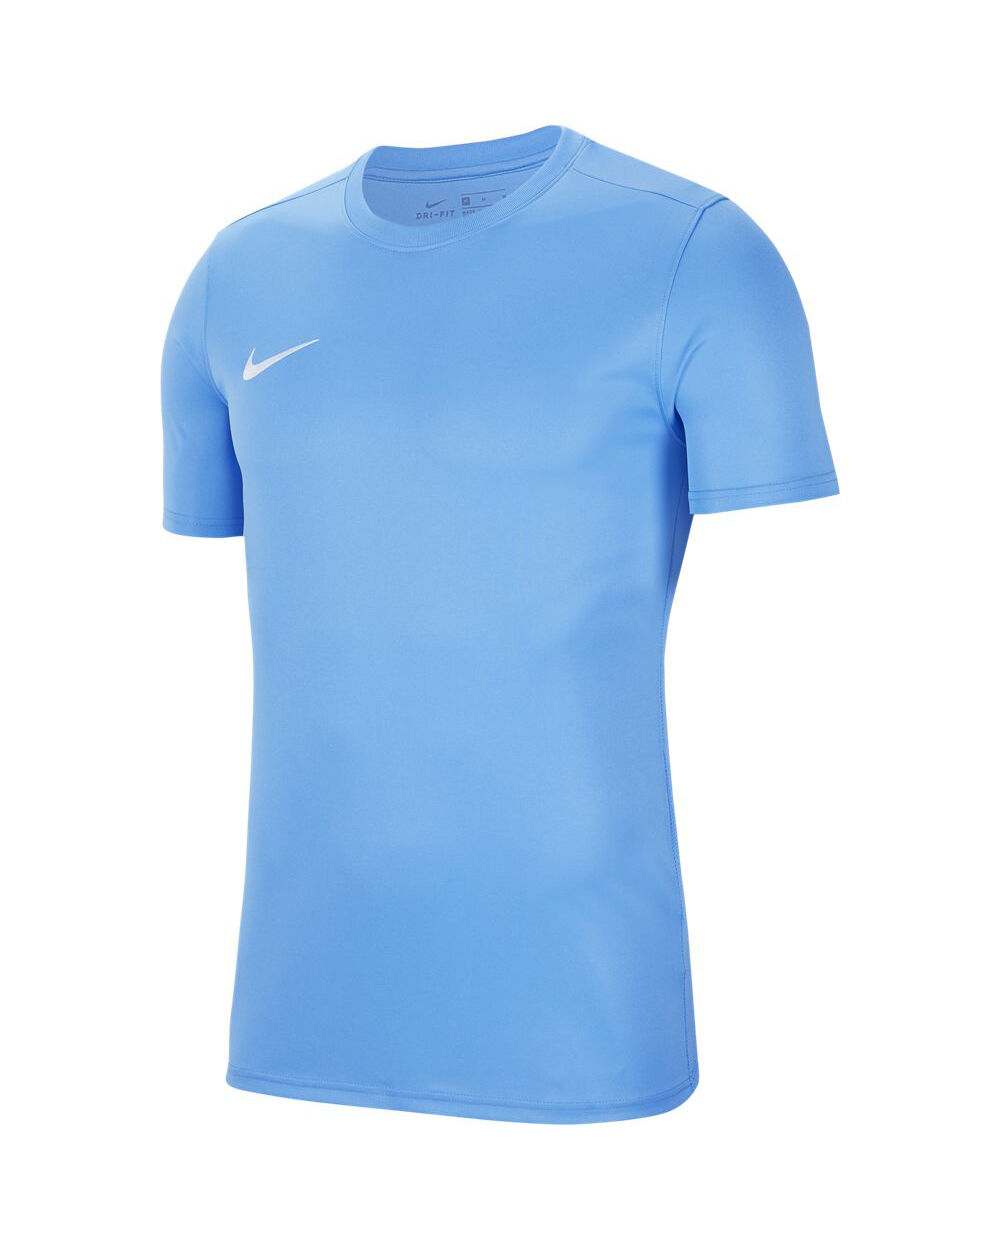 Camiseta Nike Park VII Azul Cielo para Niño - BV6741-412